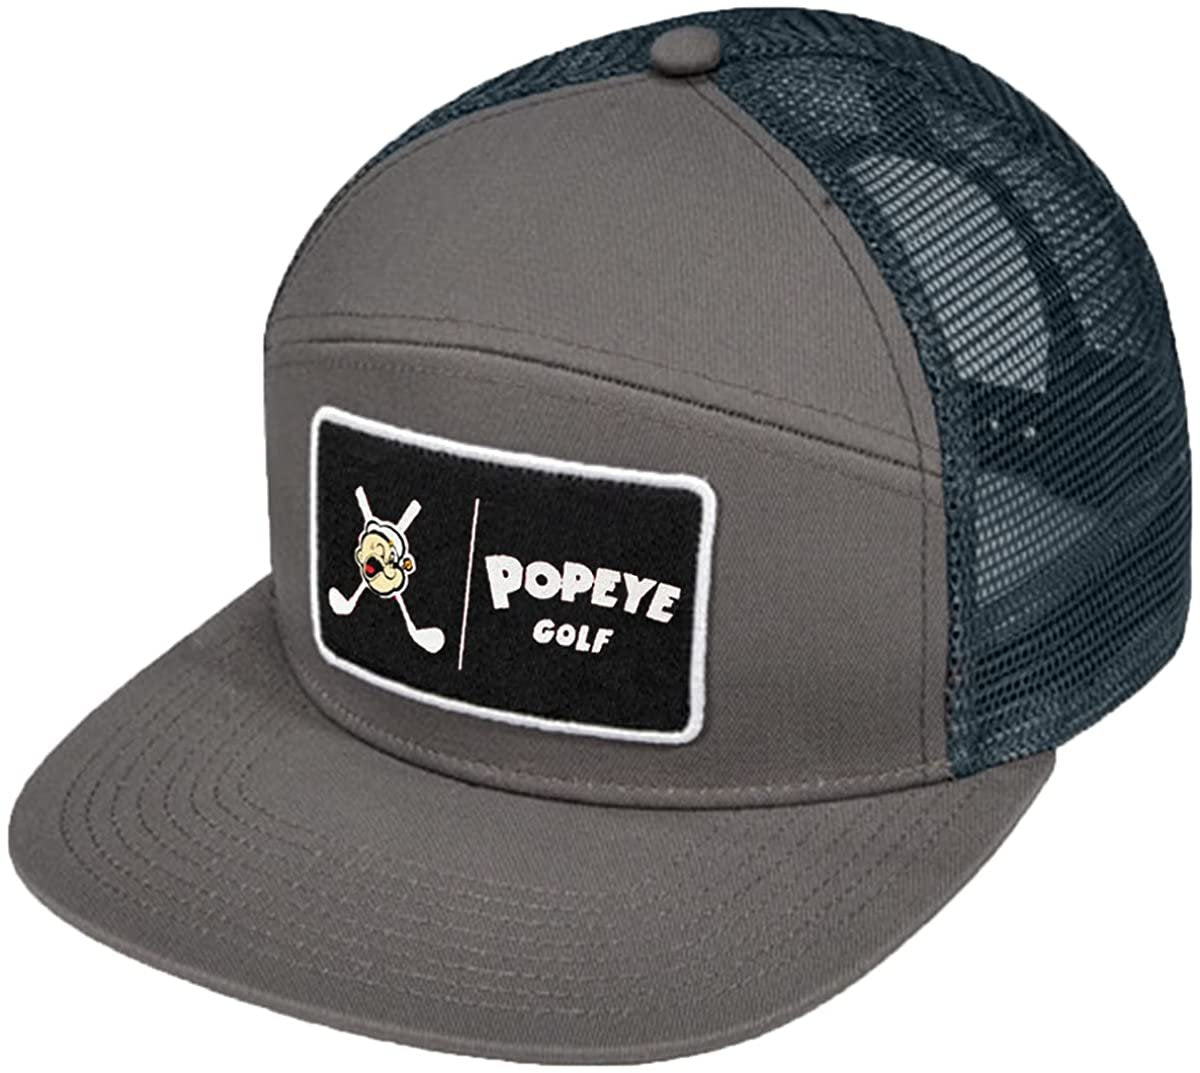 Hat Trucker Mesh Popeye Golf Adjustable Snapback Tradesman